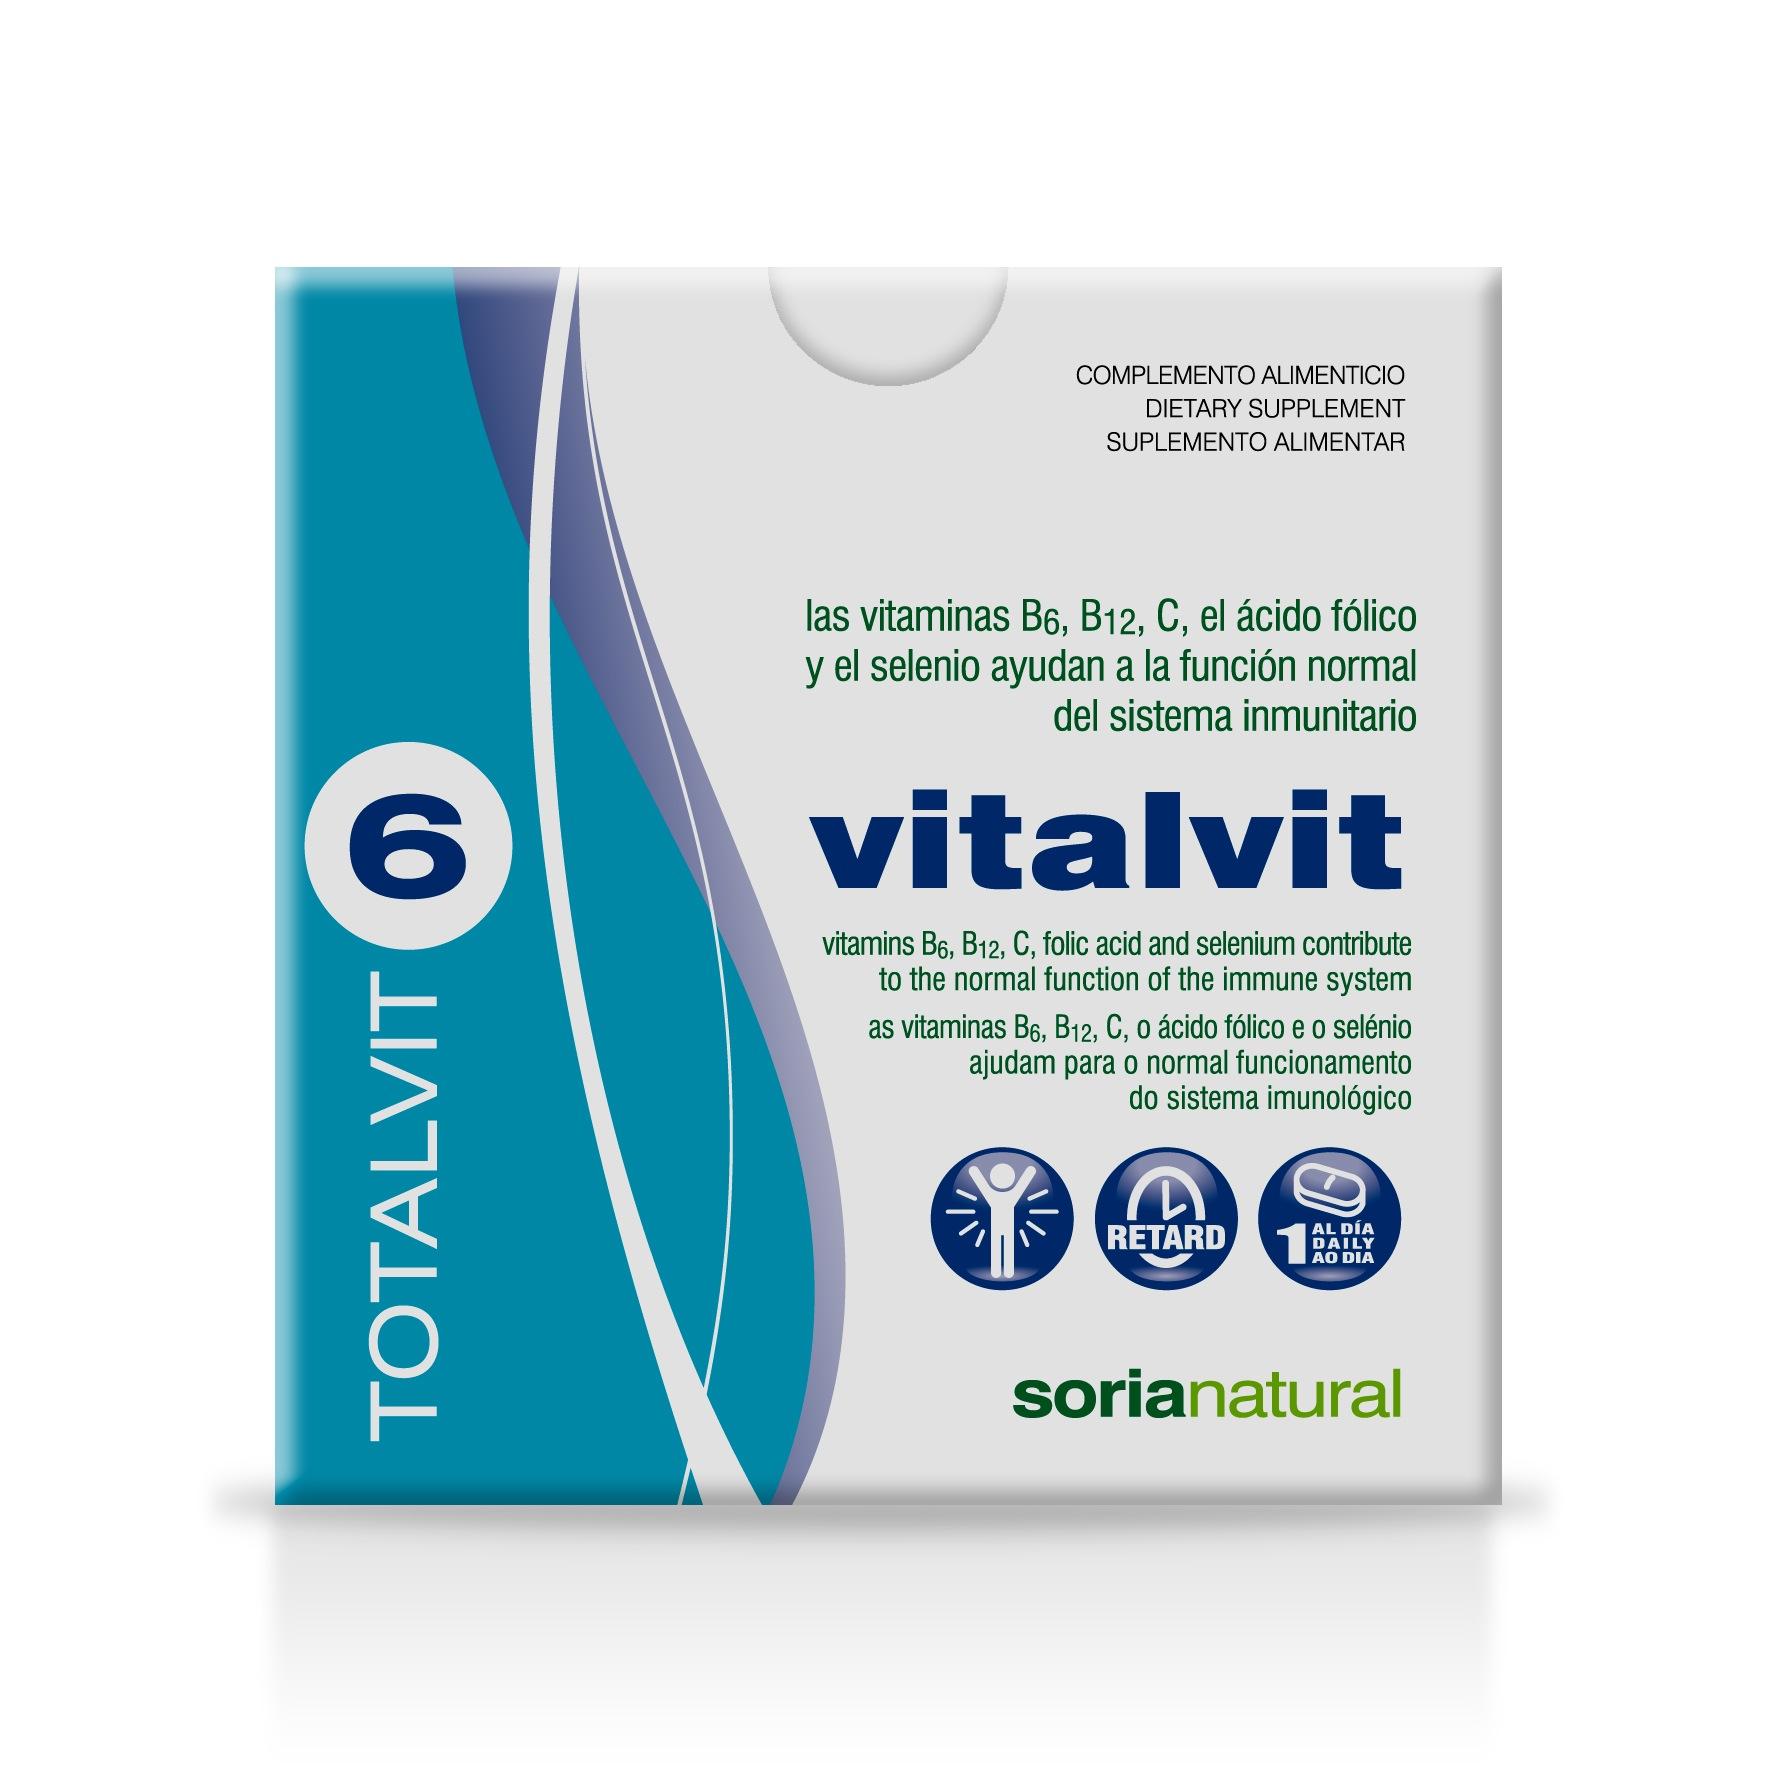 comprimidos-totalvit-06-vitalvit-soria-natural-2.jpg